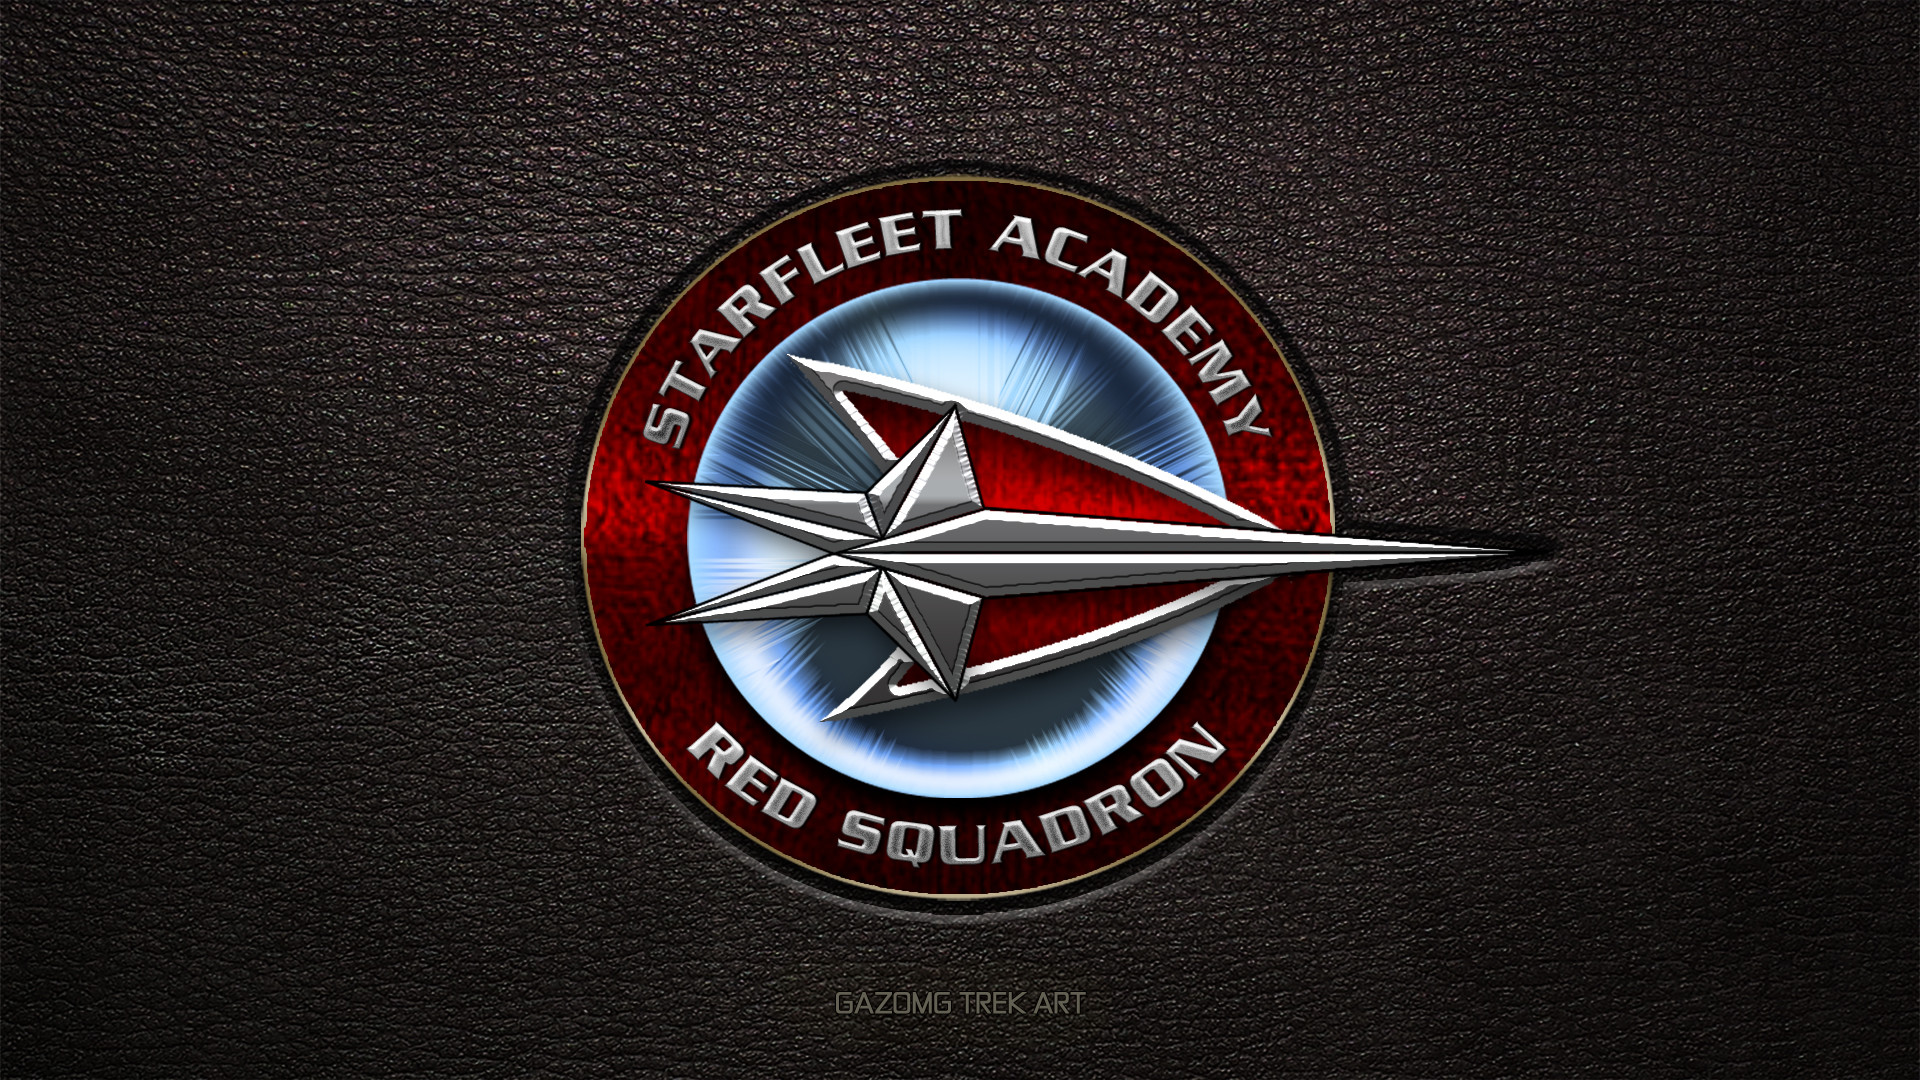 1920x1080 Starfleet Academy Red Squadron Star Trek Logo By Gazomg On